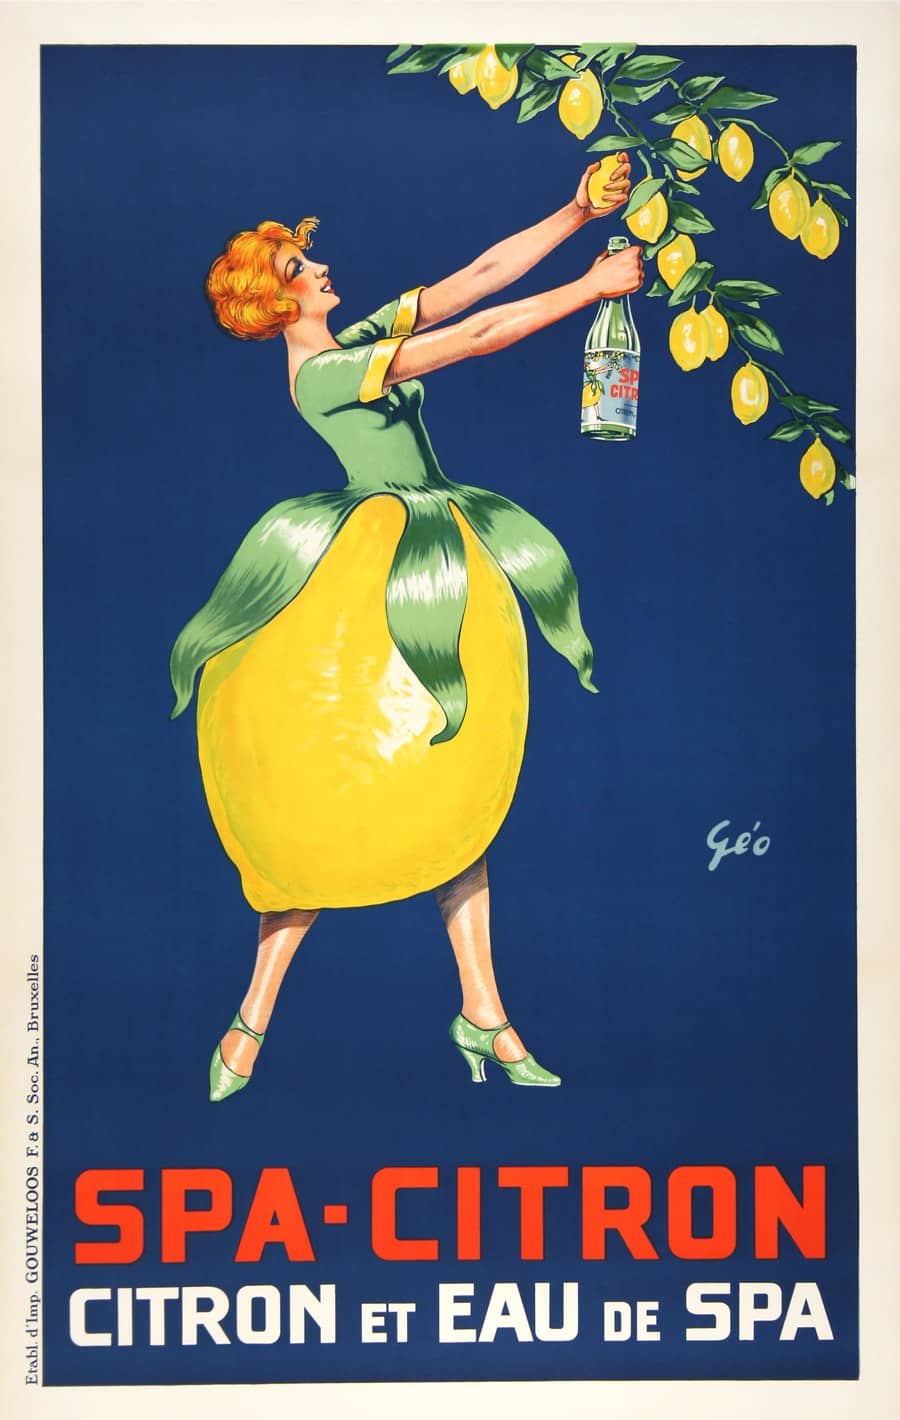 Original Spa Citron Poster by Geo for Lemon Drink c1930